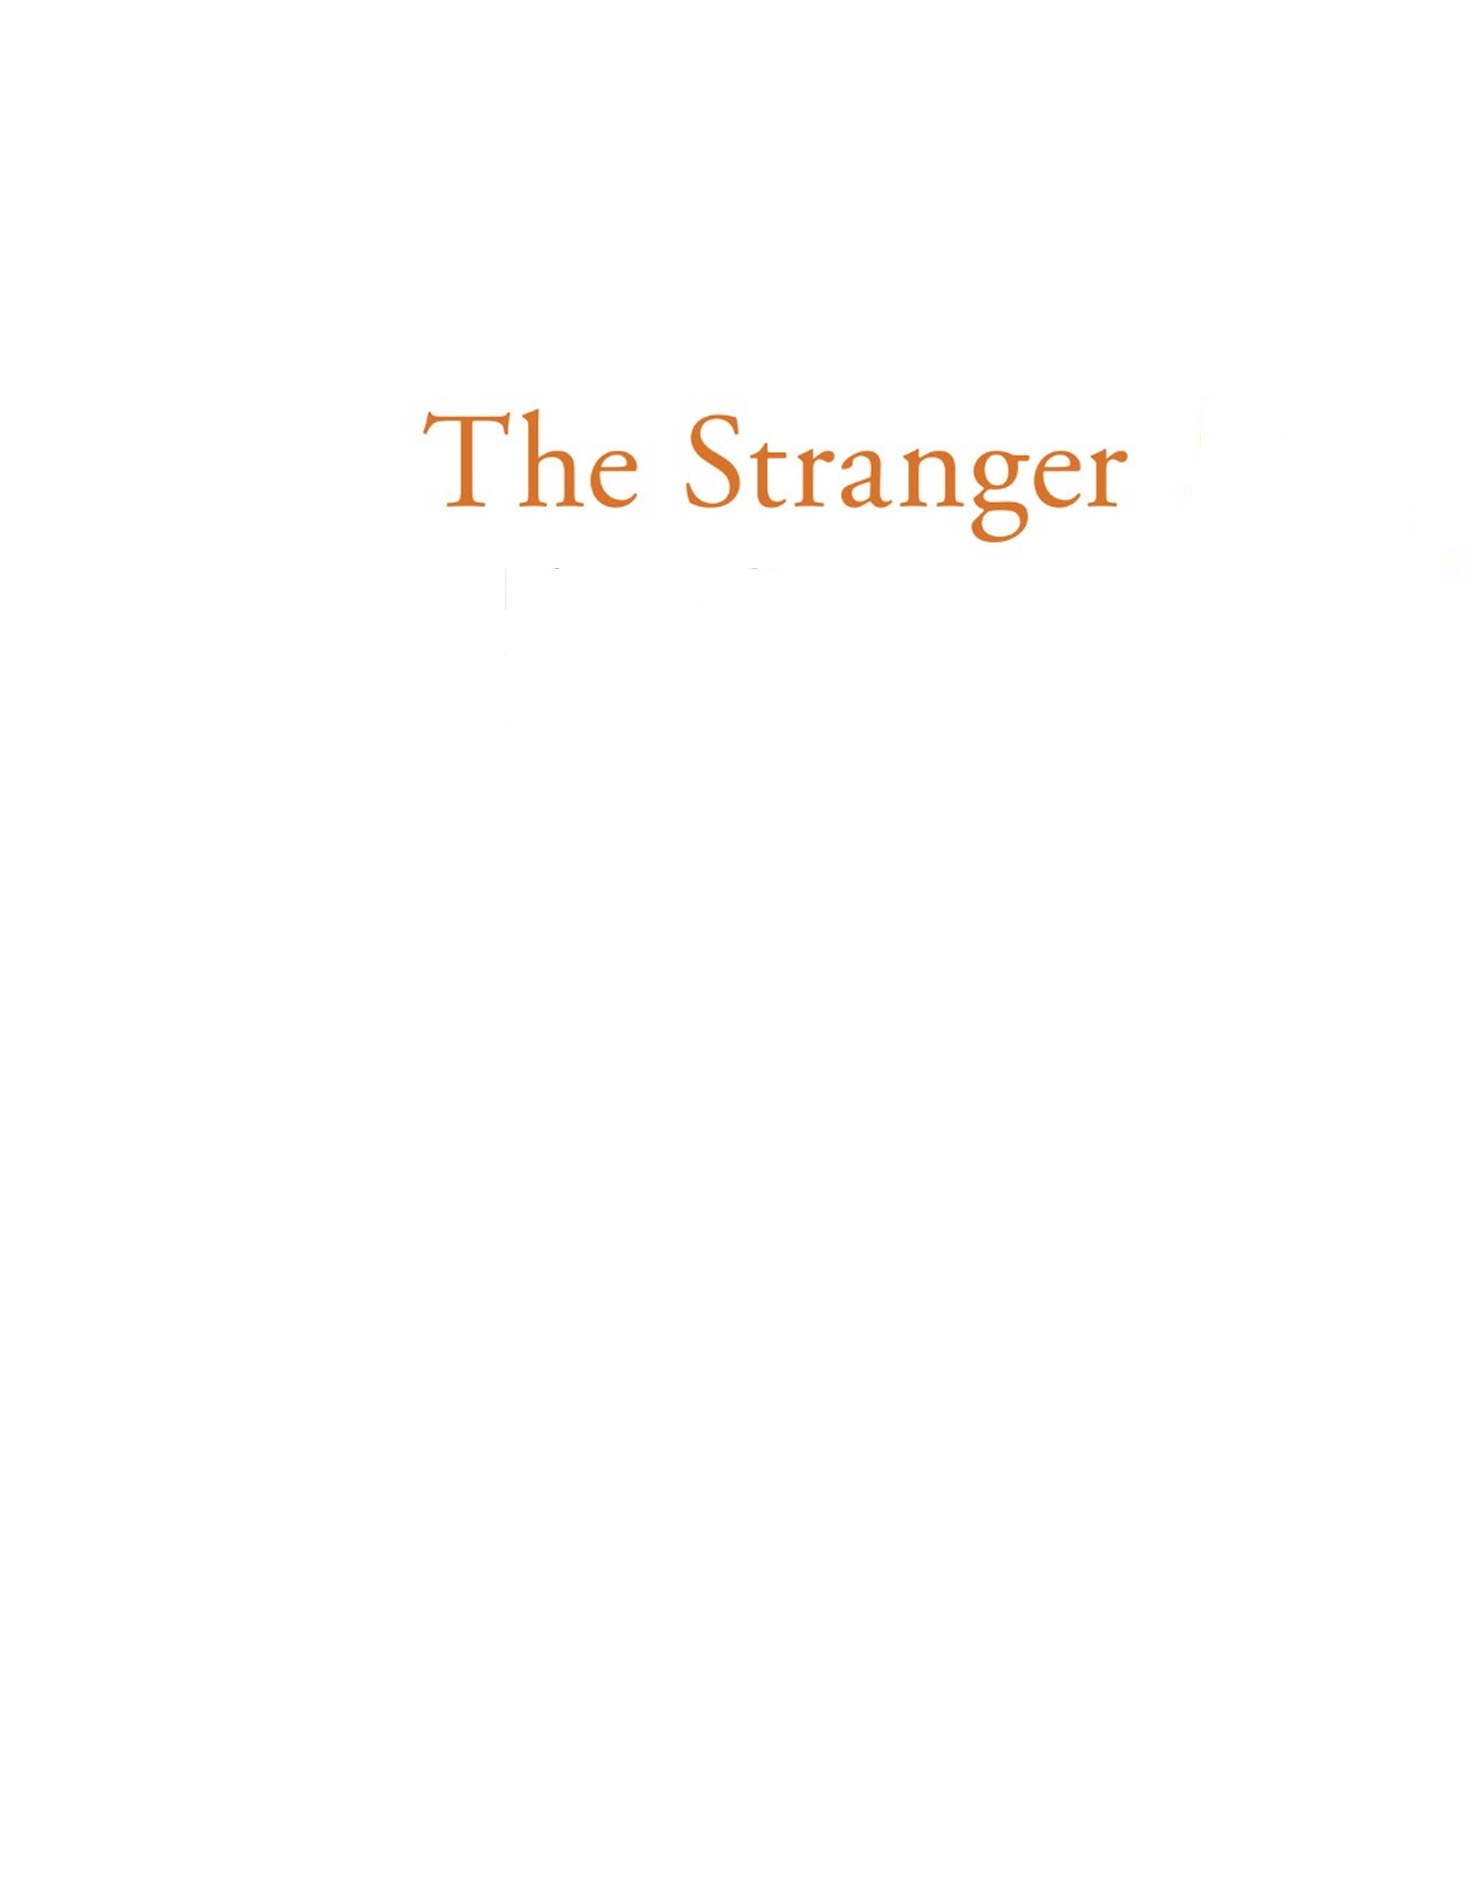 Read online The Stranger: The Graphic Novel comic -  Issue # TPB - 2